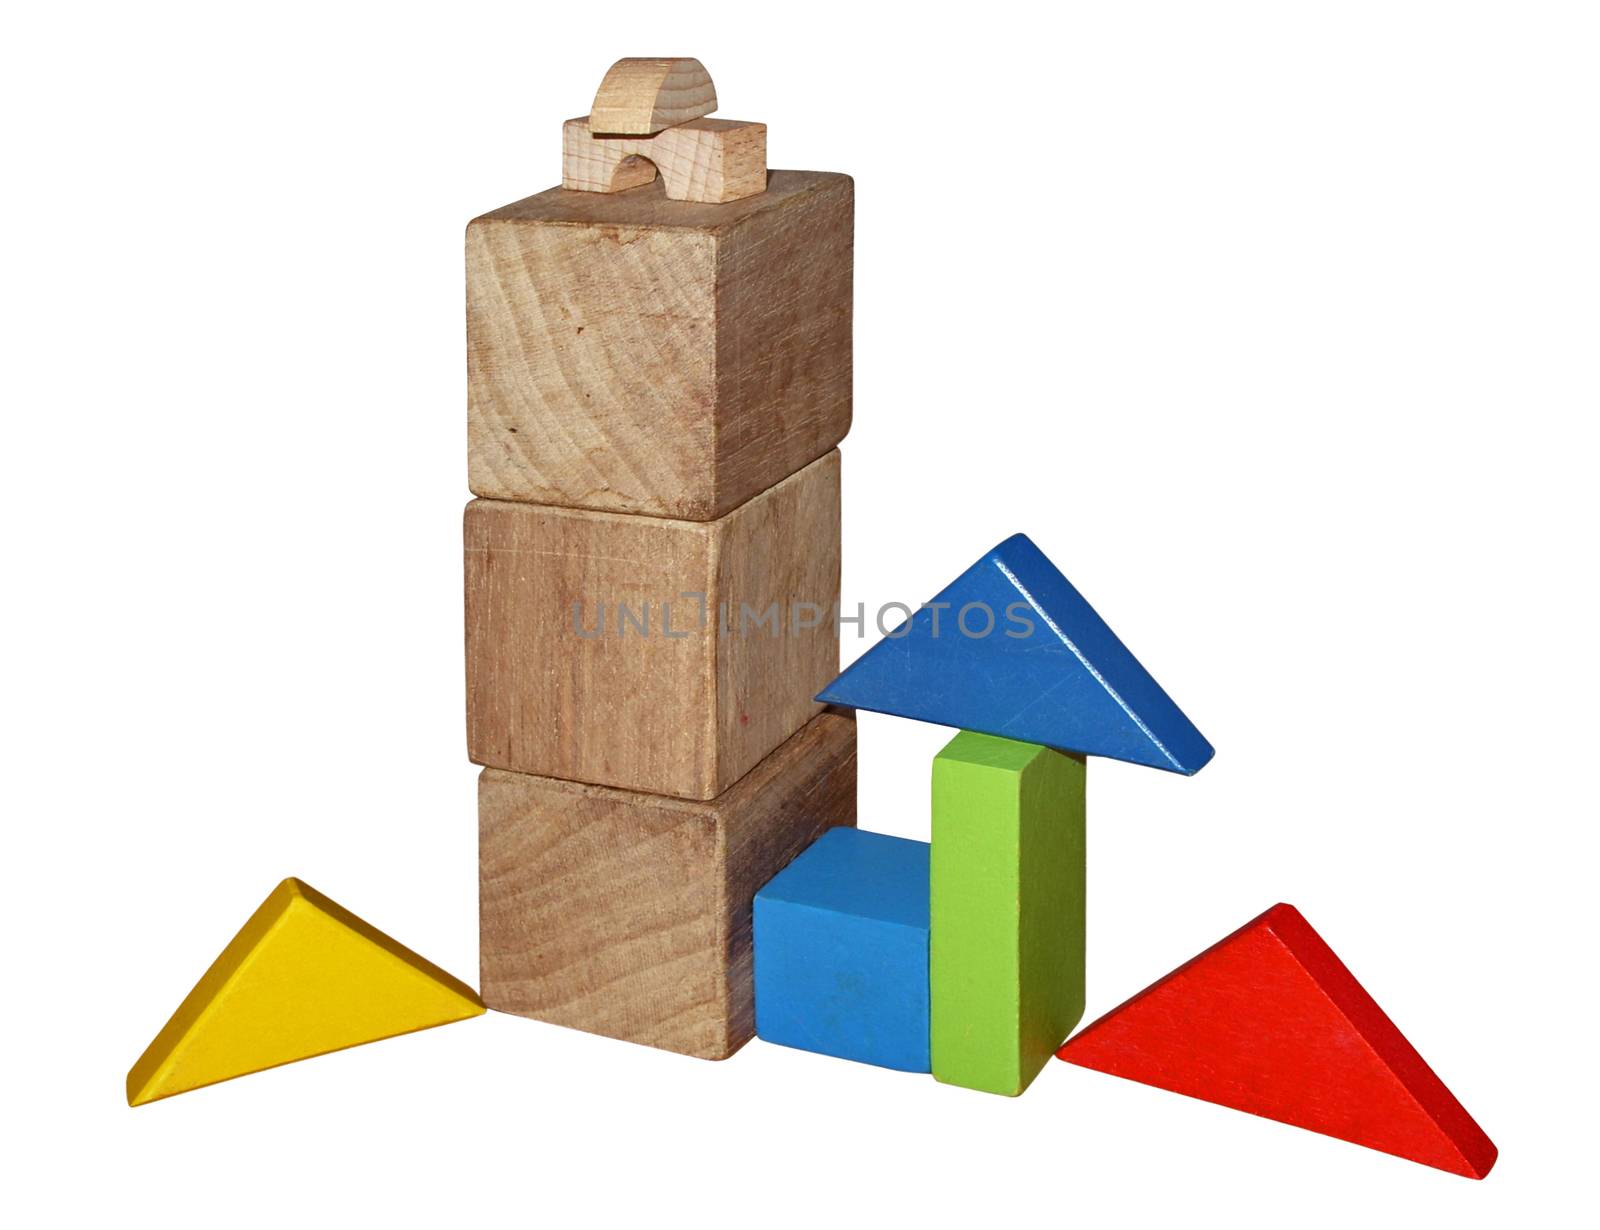 Wooden blocks for play - Montessori toys